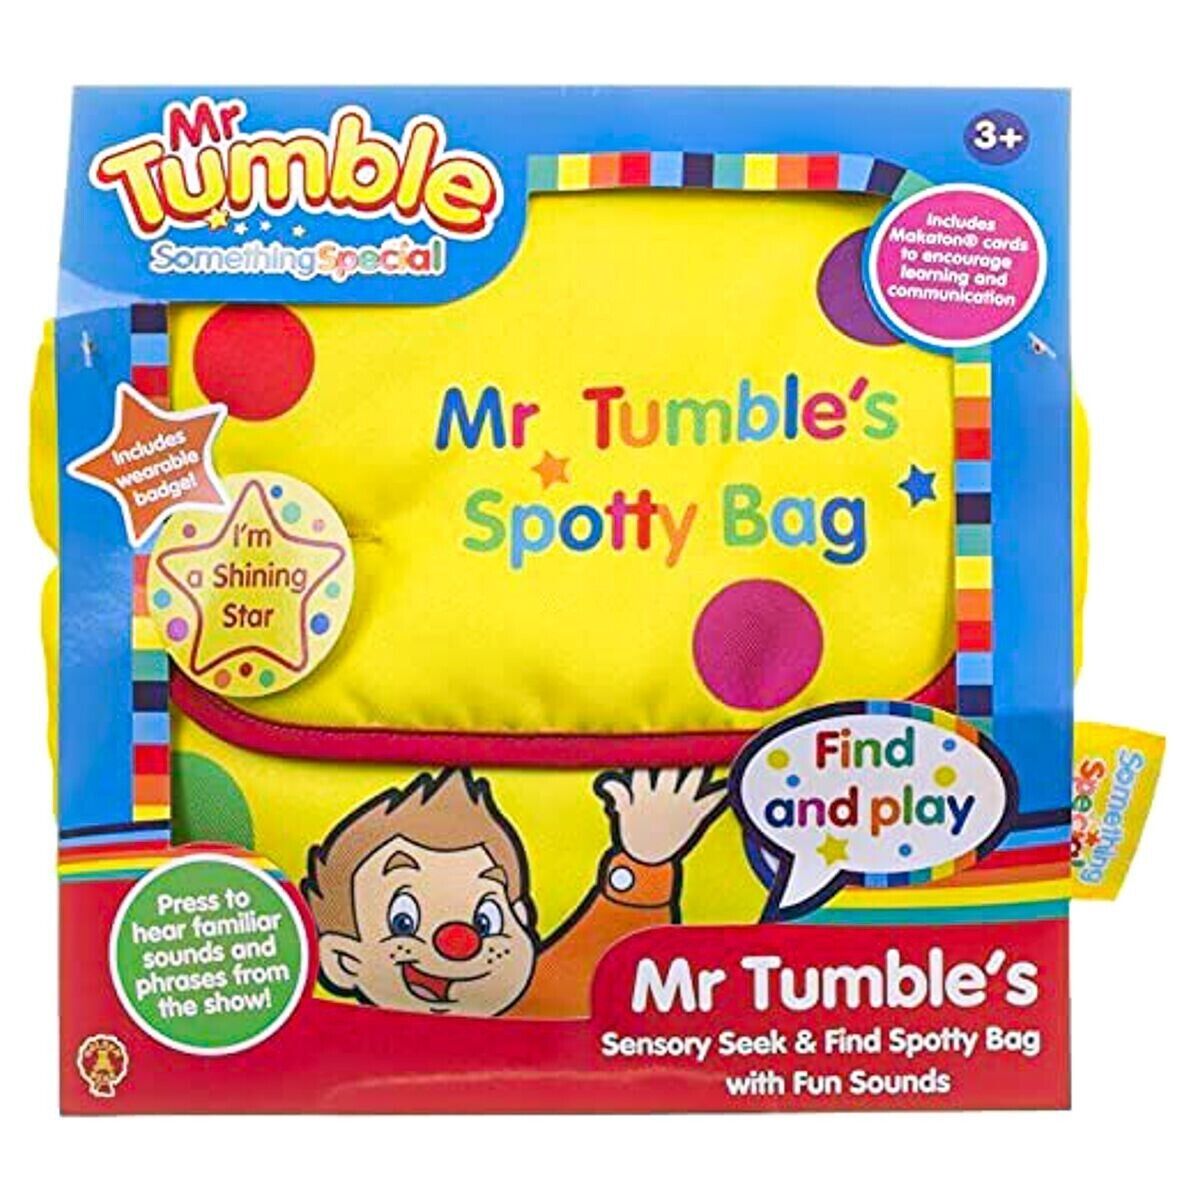 New Mr Tumble Sensory Spotty Bag w/ Fun Sounds - Seek & Find Toy for Kids